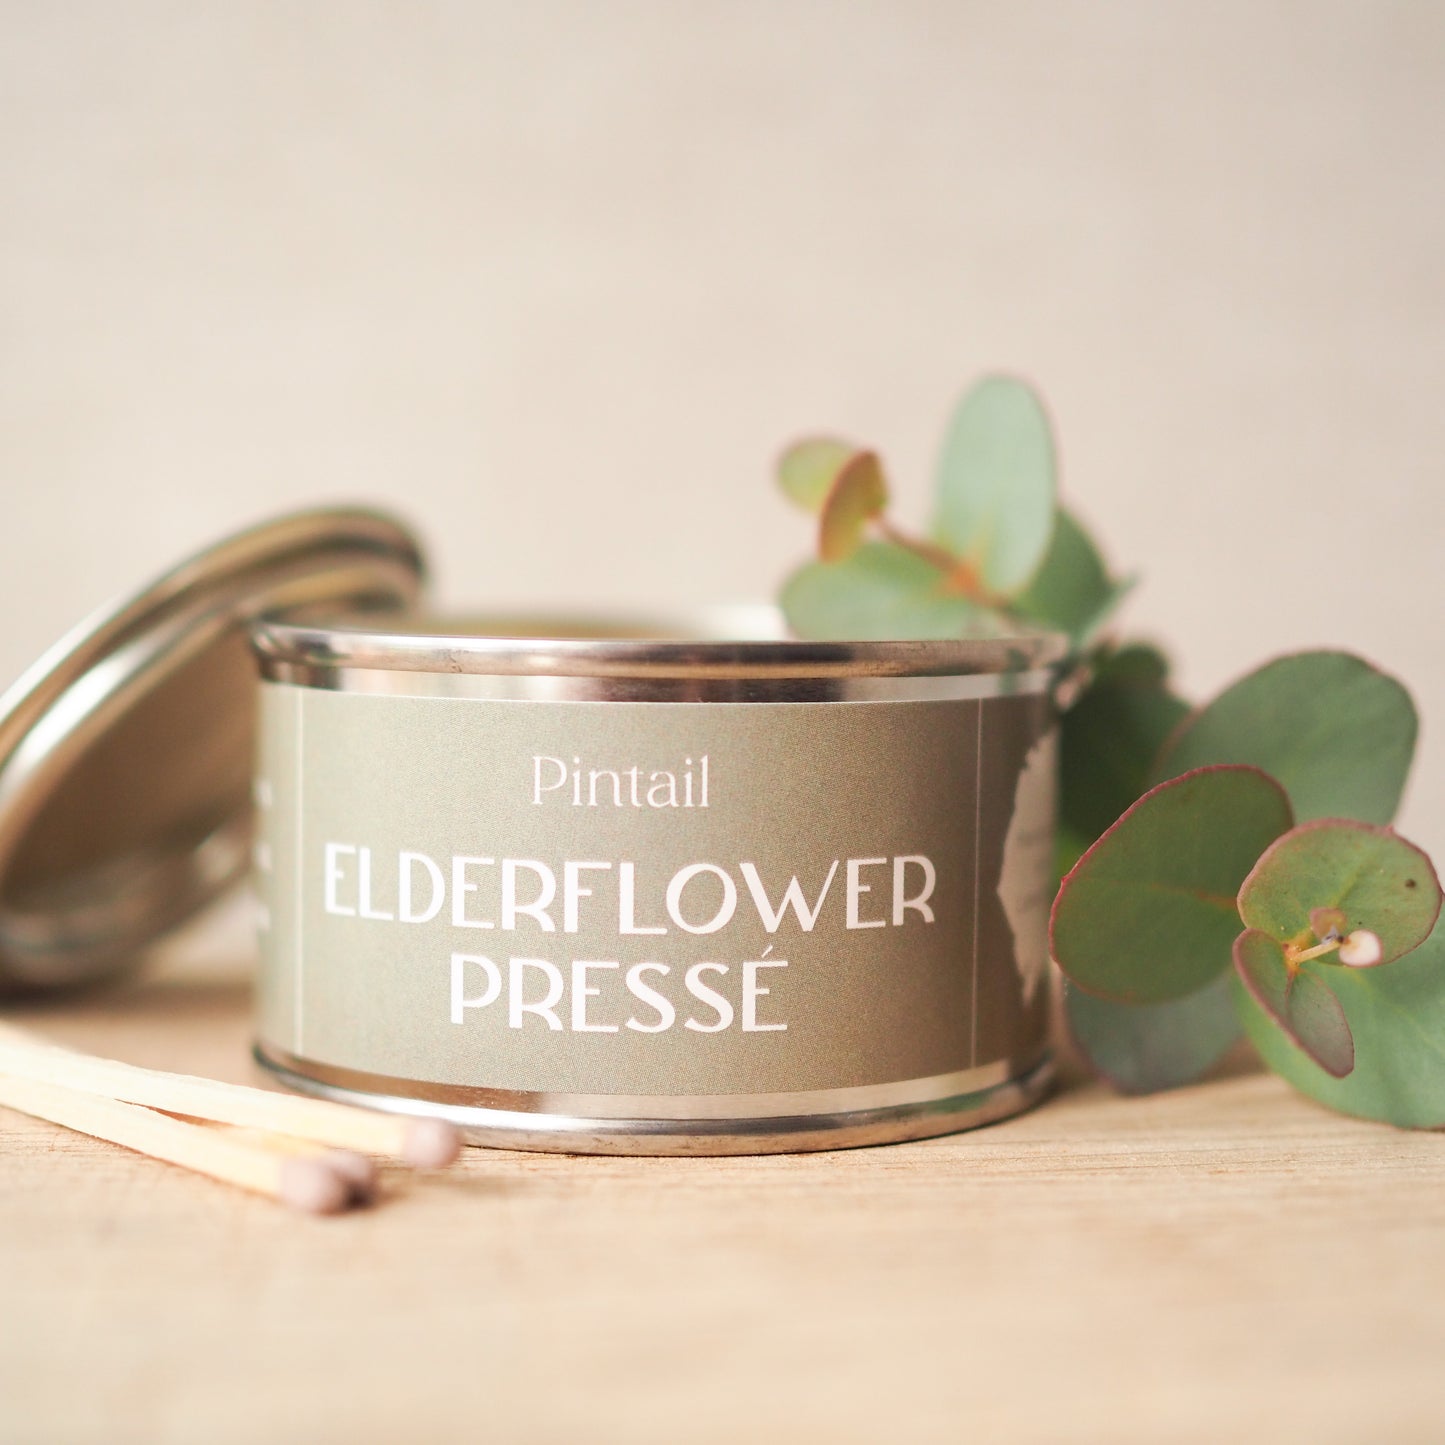 Elderflower Presse Paint Pot